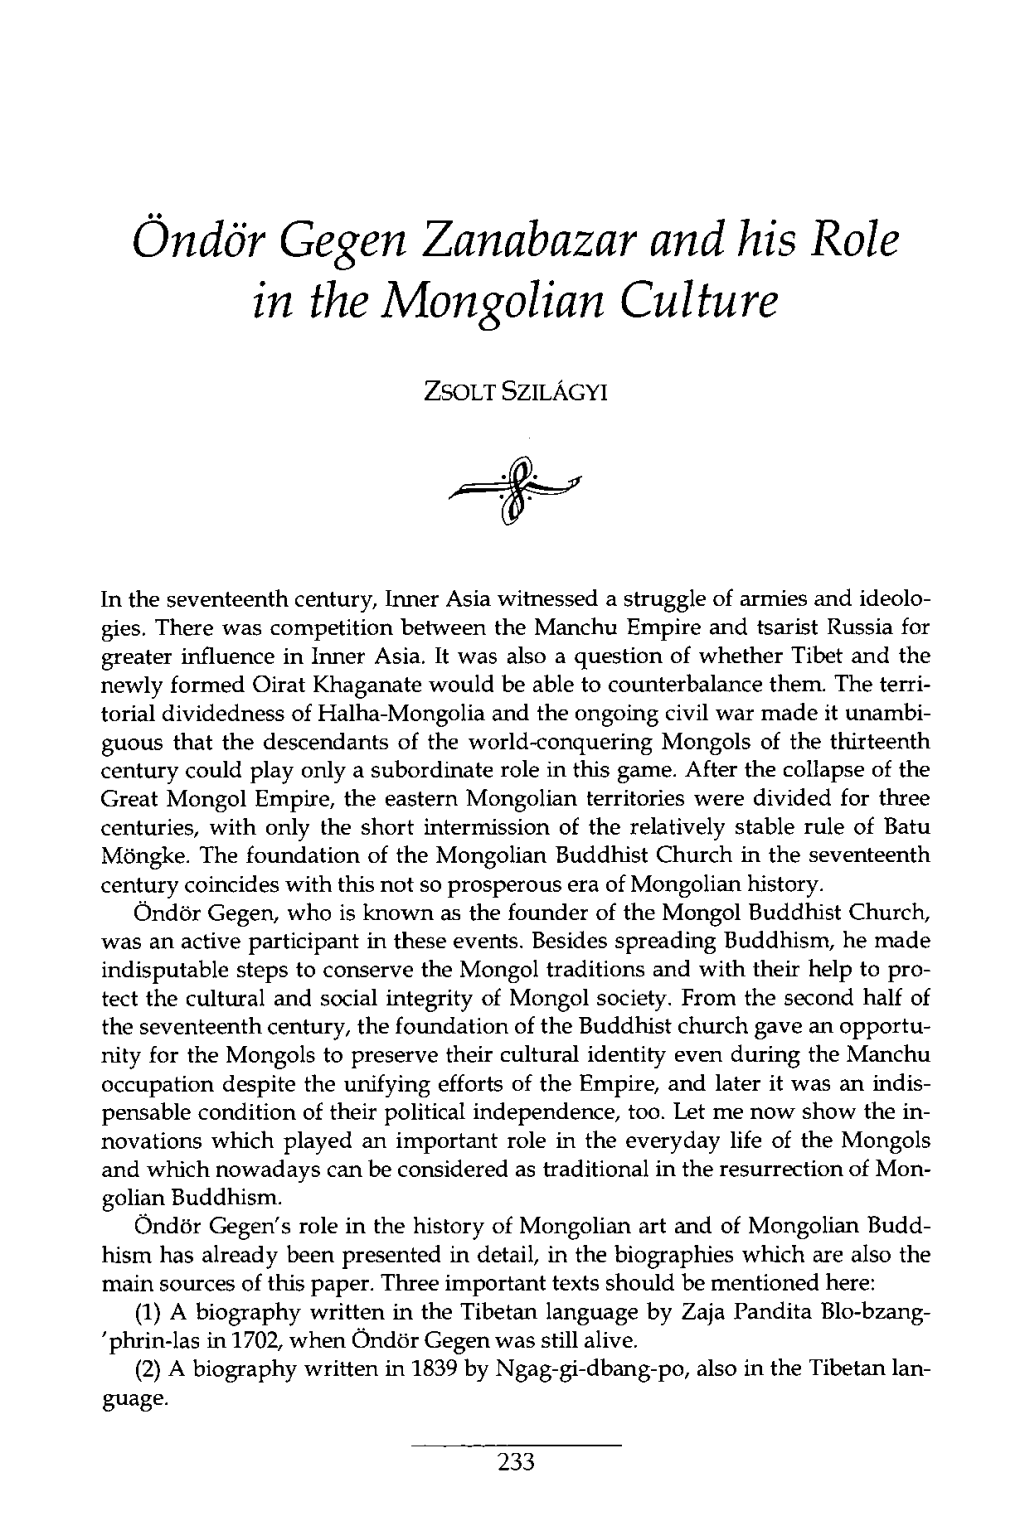 Öndör Gegen Zanabazar and His Role in the Mongolian Culture